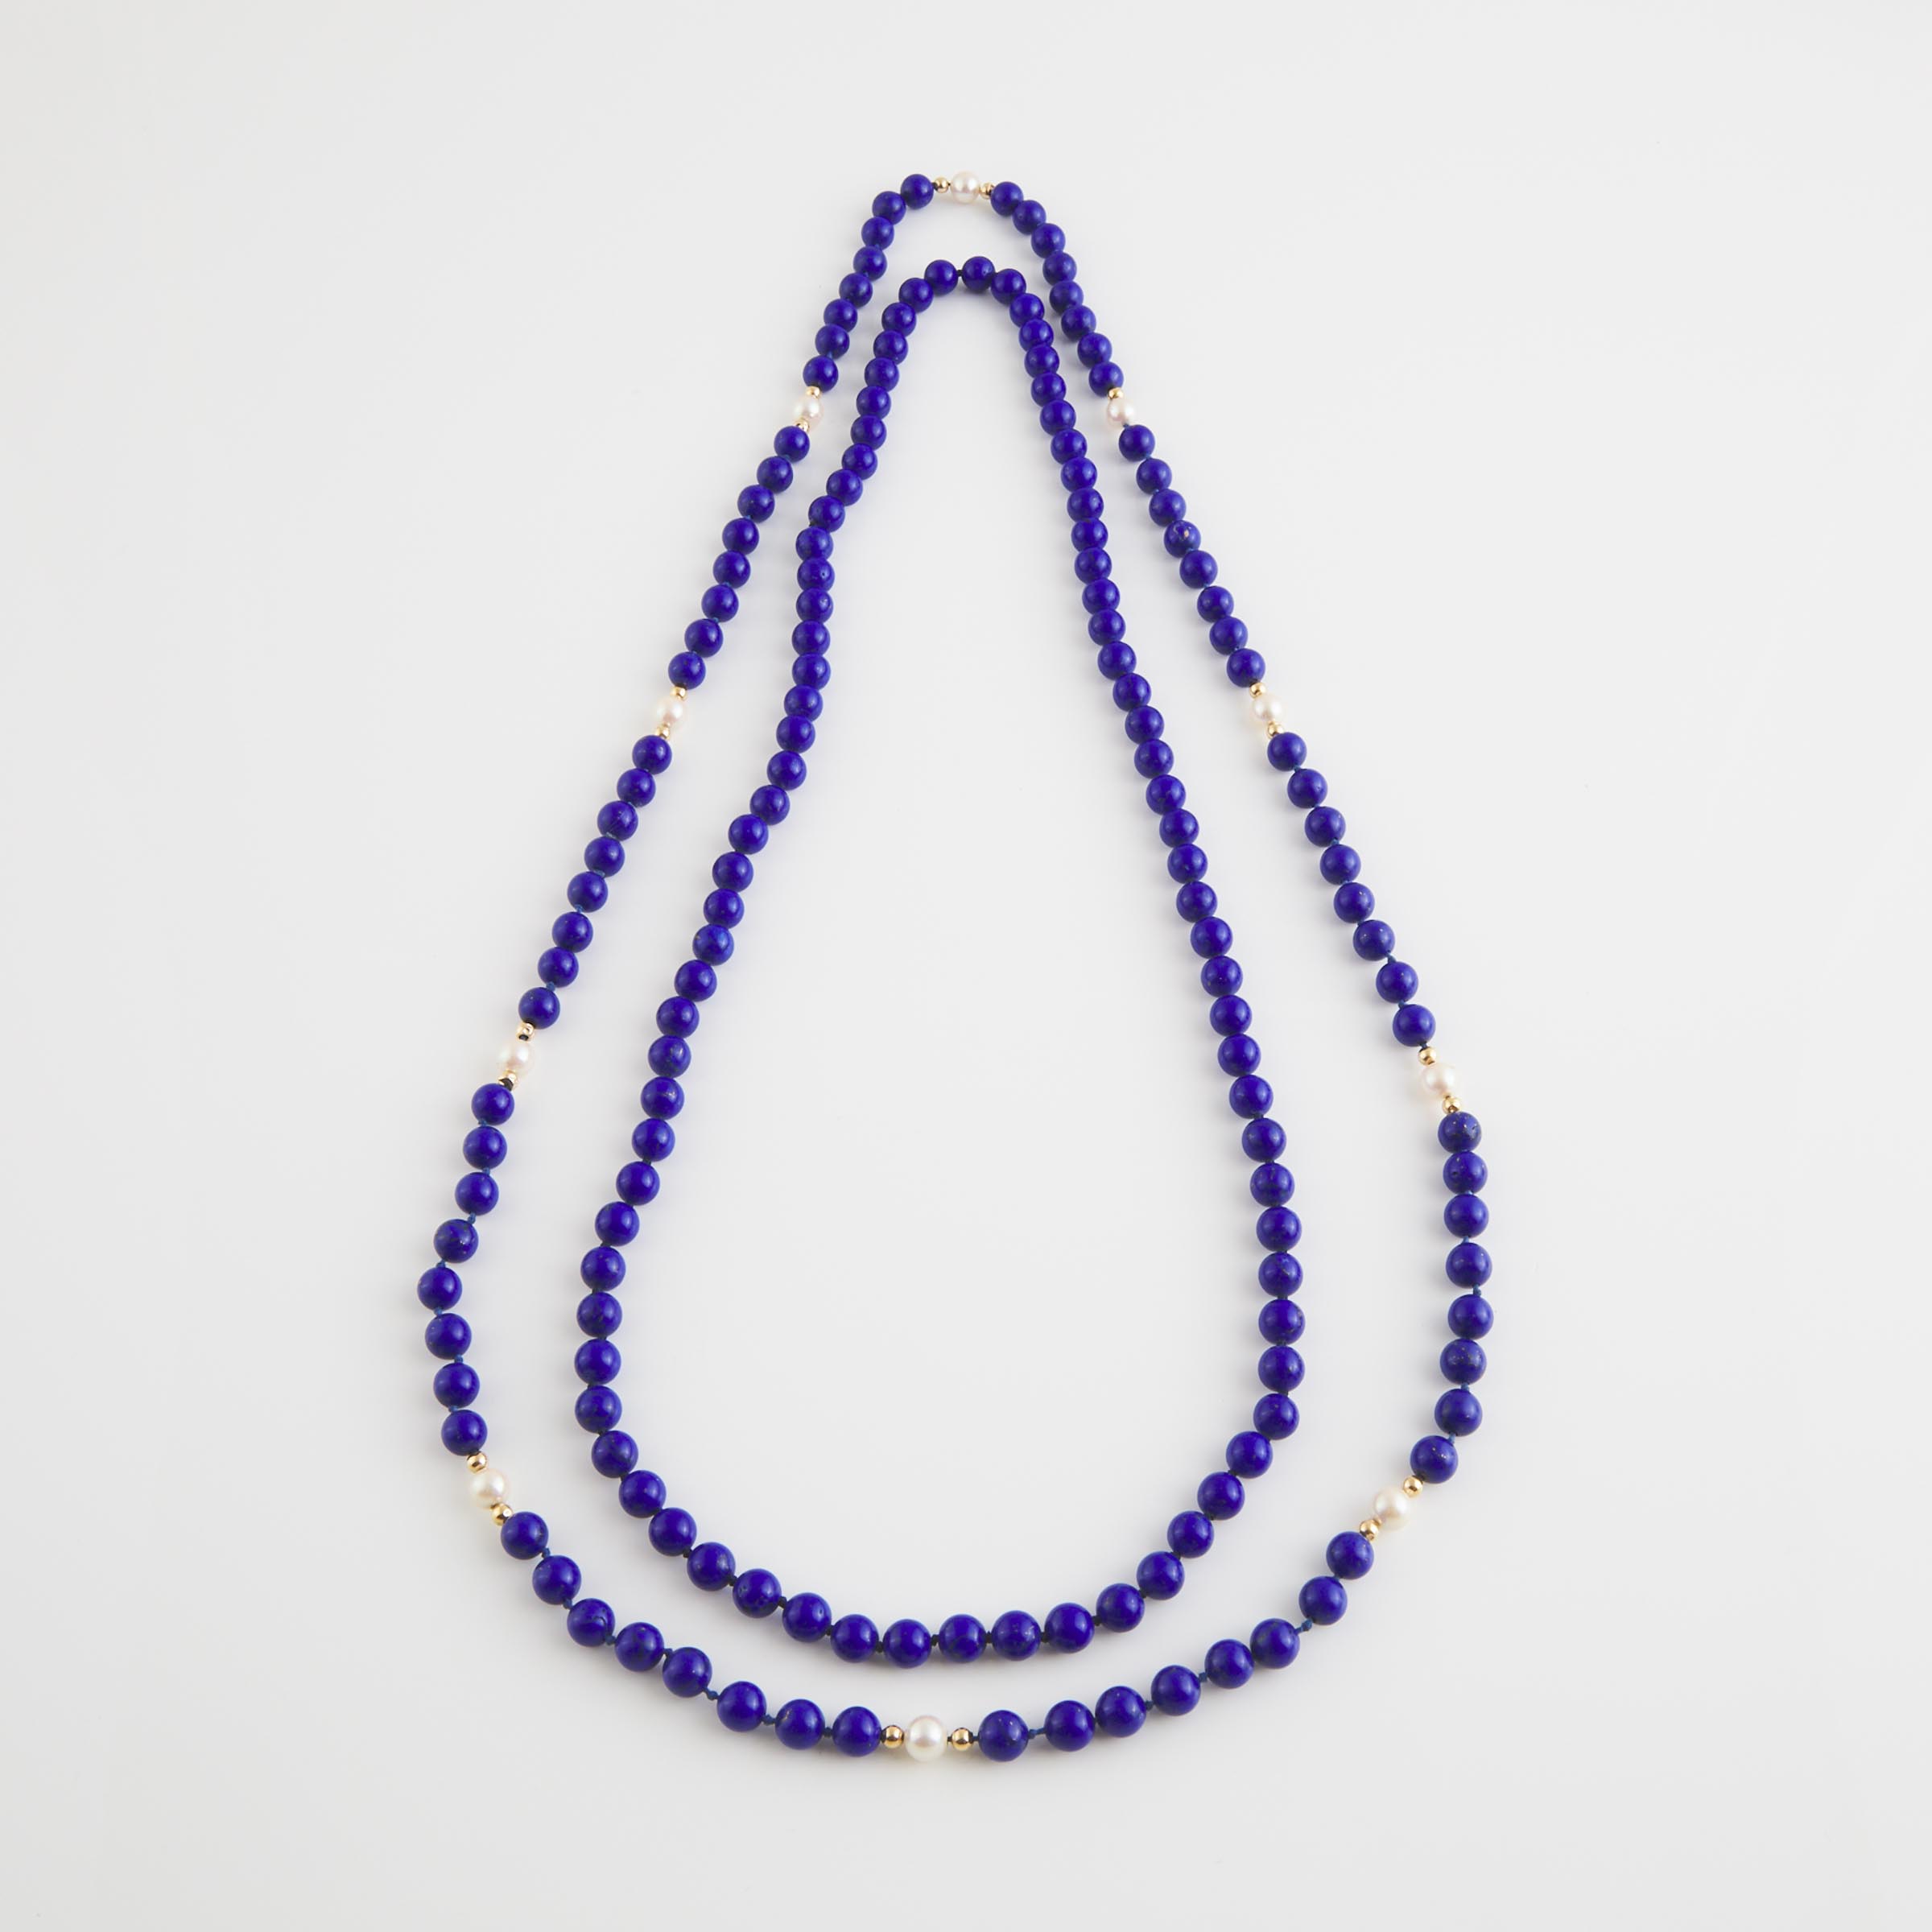 2 Single Strand Endless Lapis Bead Necklaces 